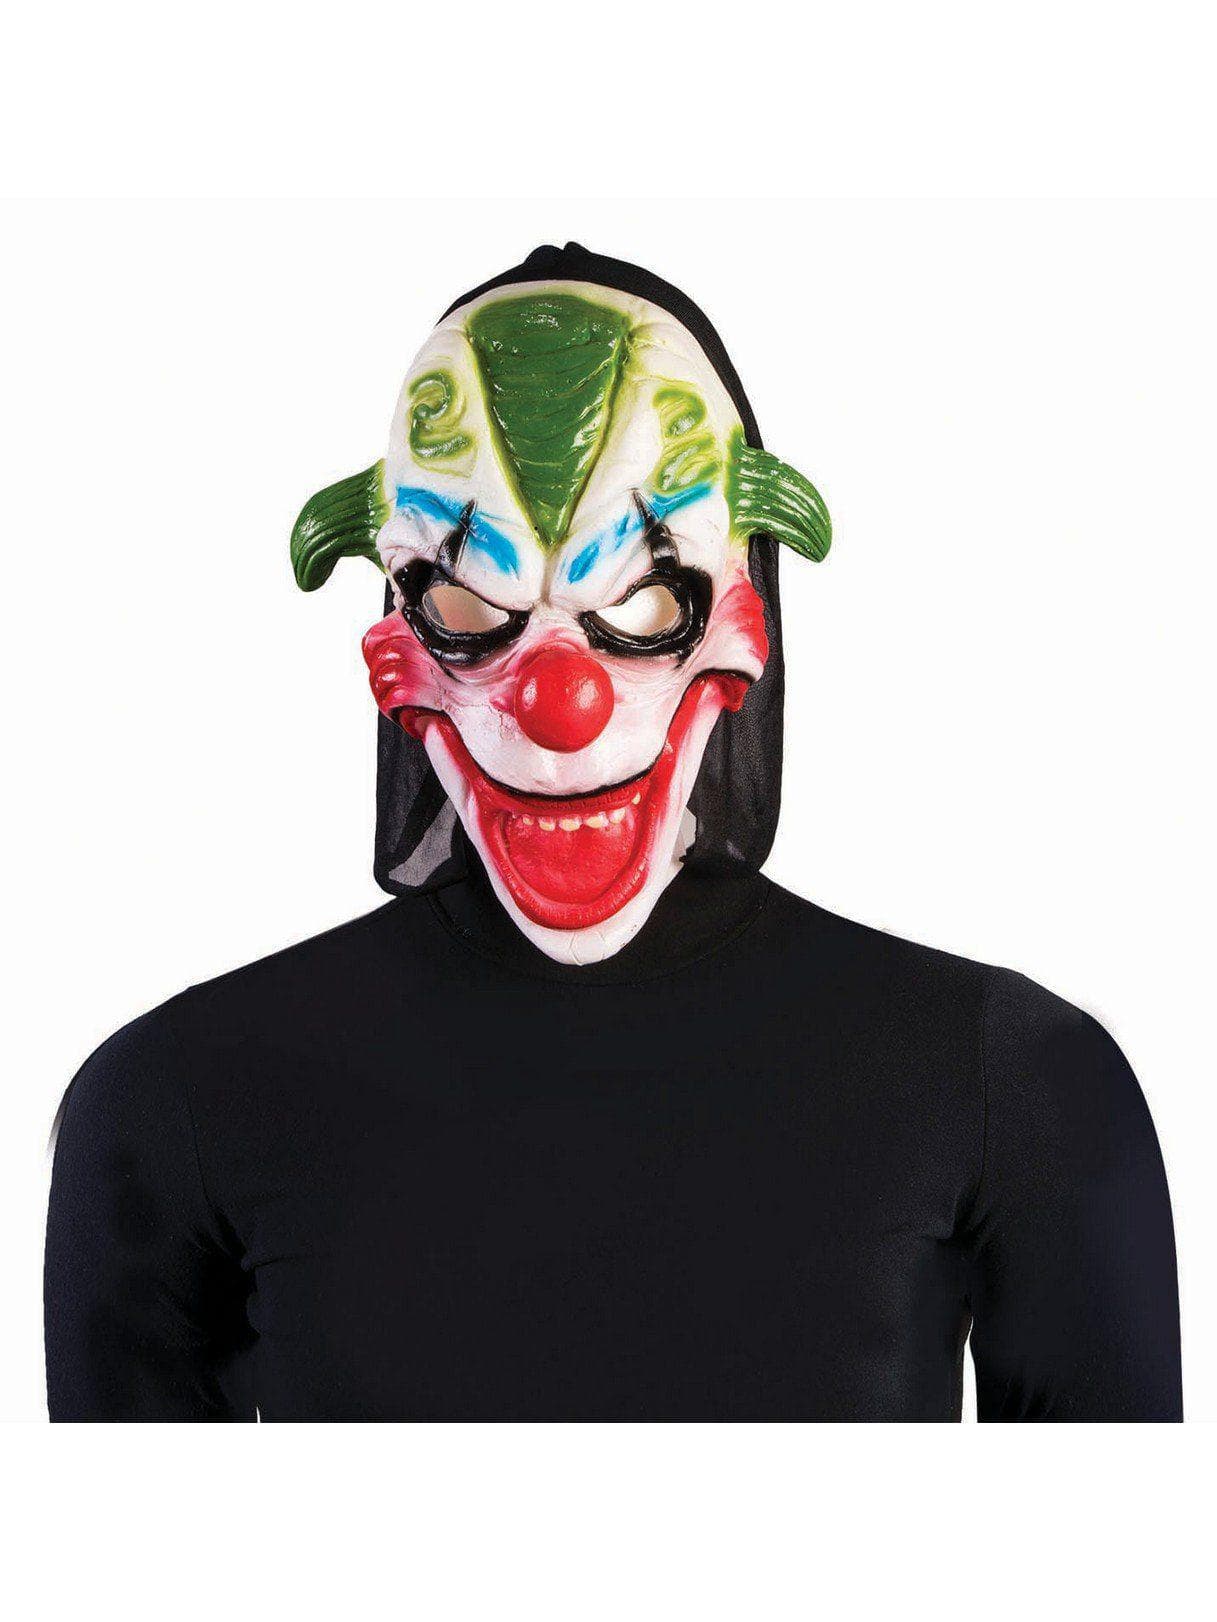 Green Hair Evil Clown Mask - costumes.com